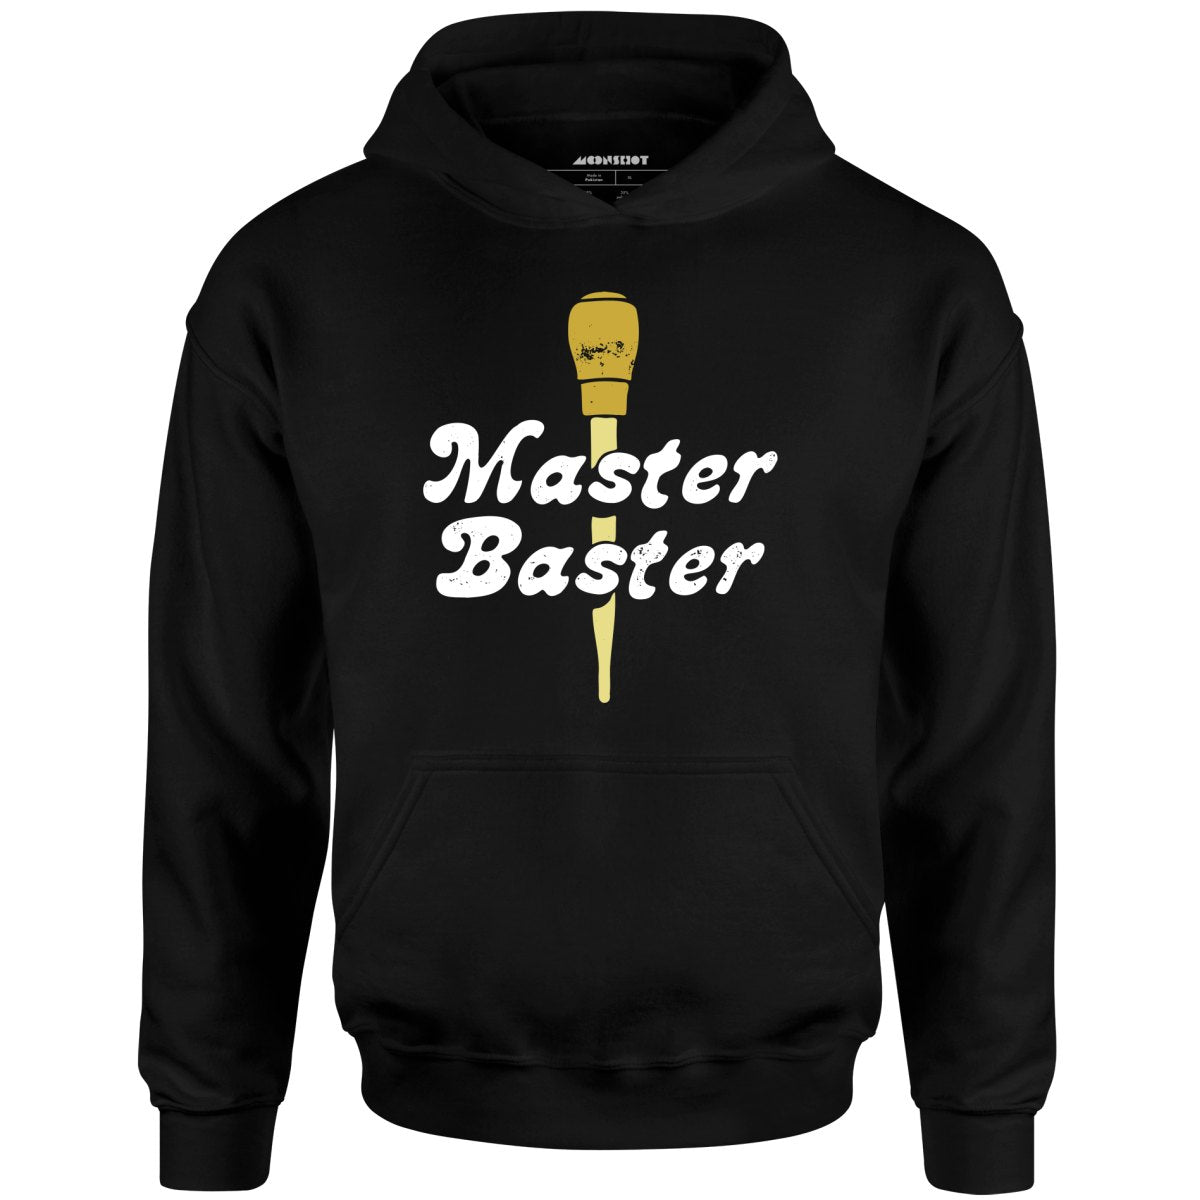 Master Baster - Unisex Hoodie